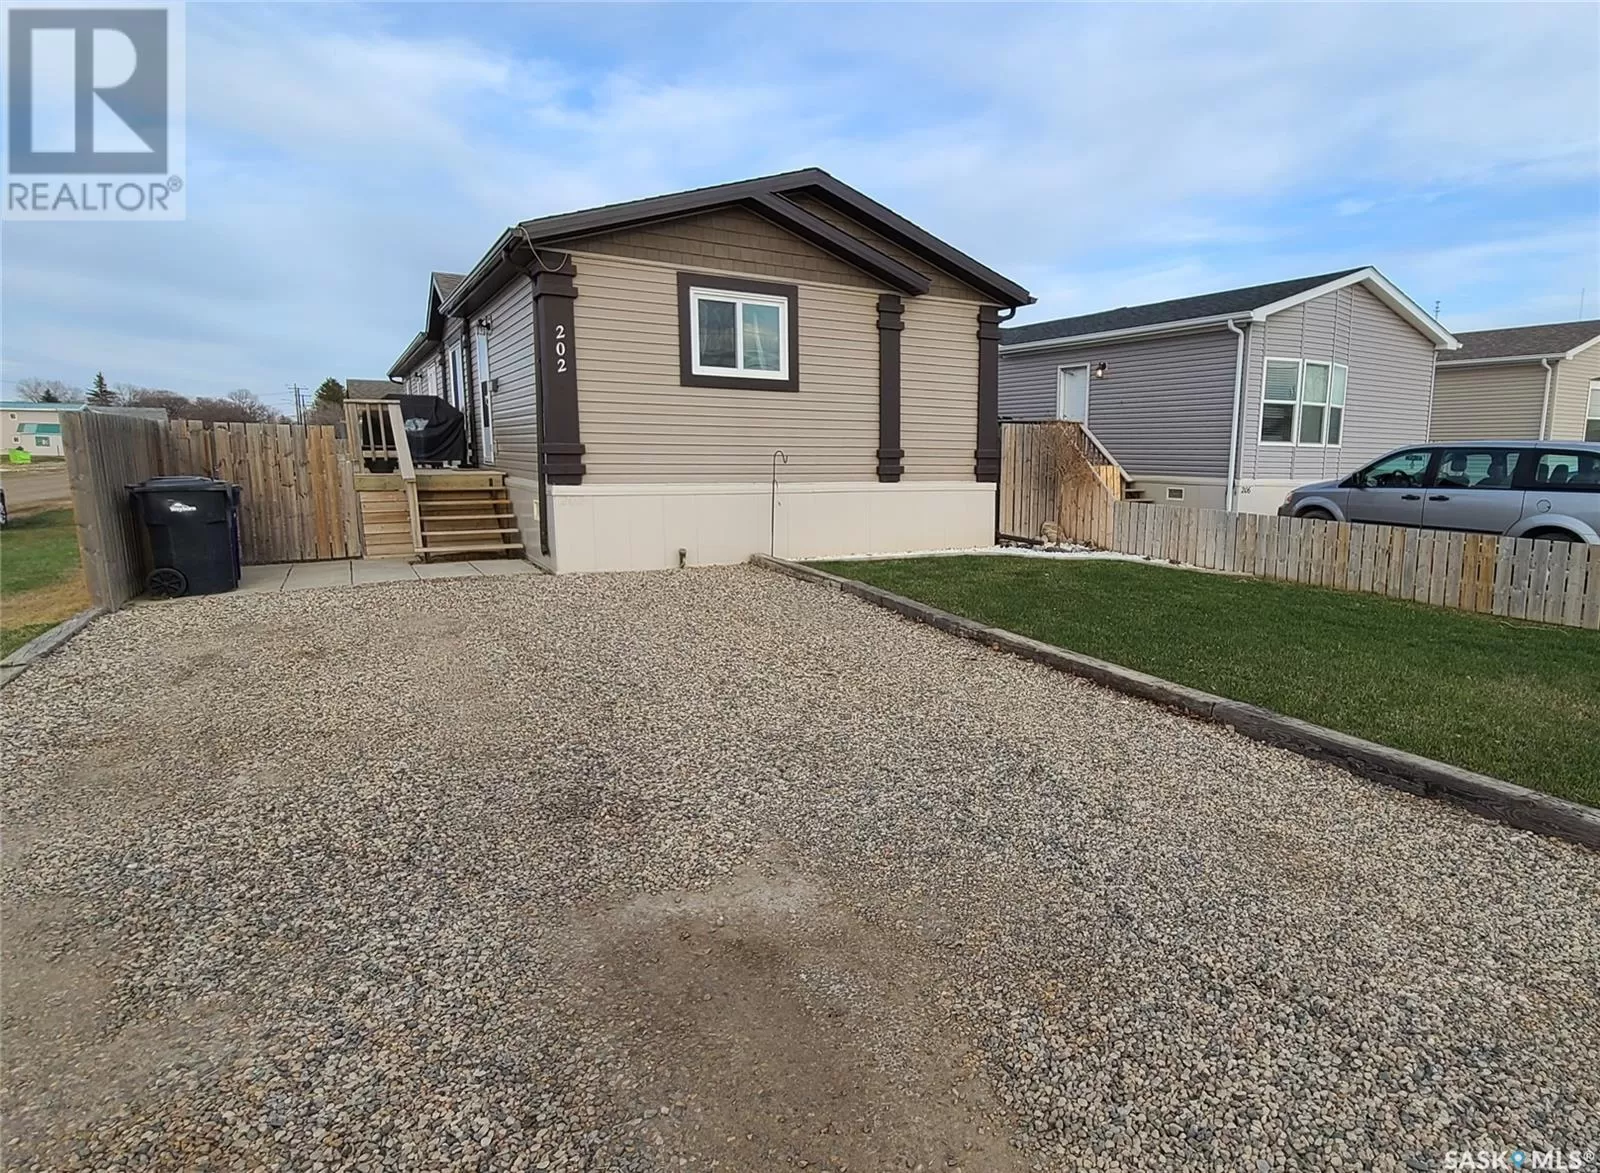 Mobile Home for rent: 202 Brownlee Street, Weyburn, Saskatchewan S4H 3P4